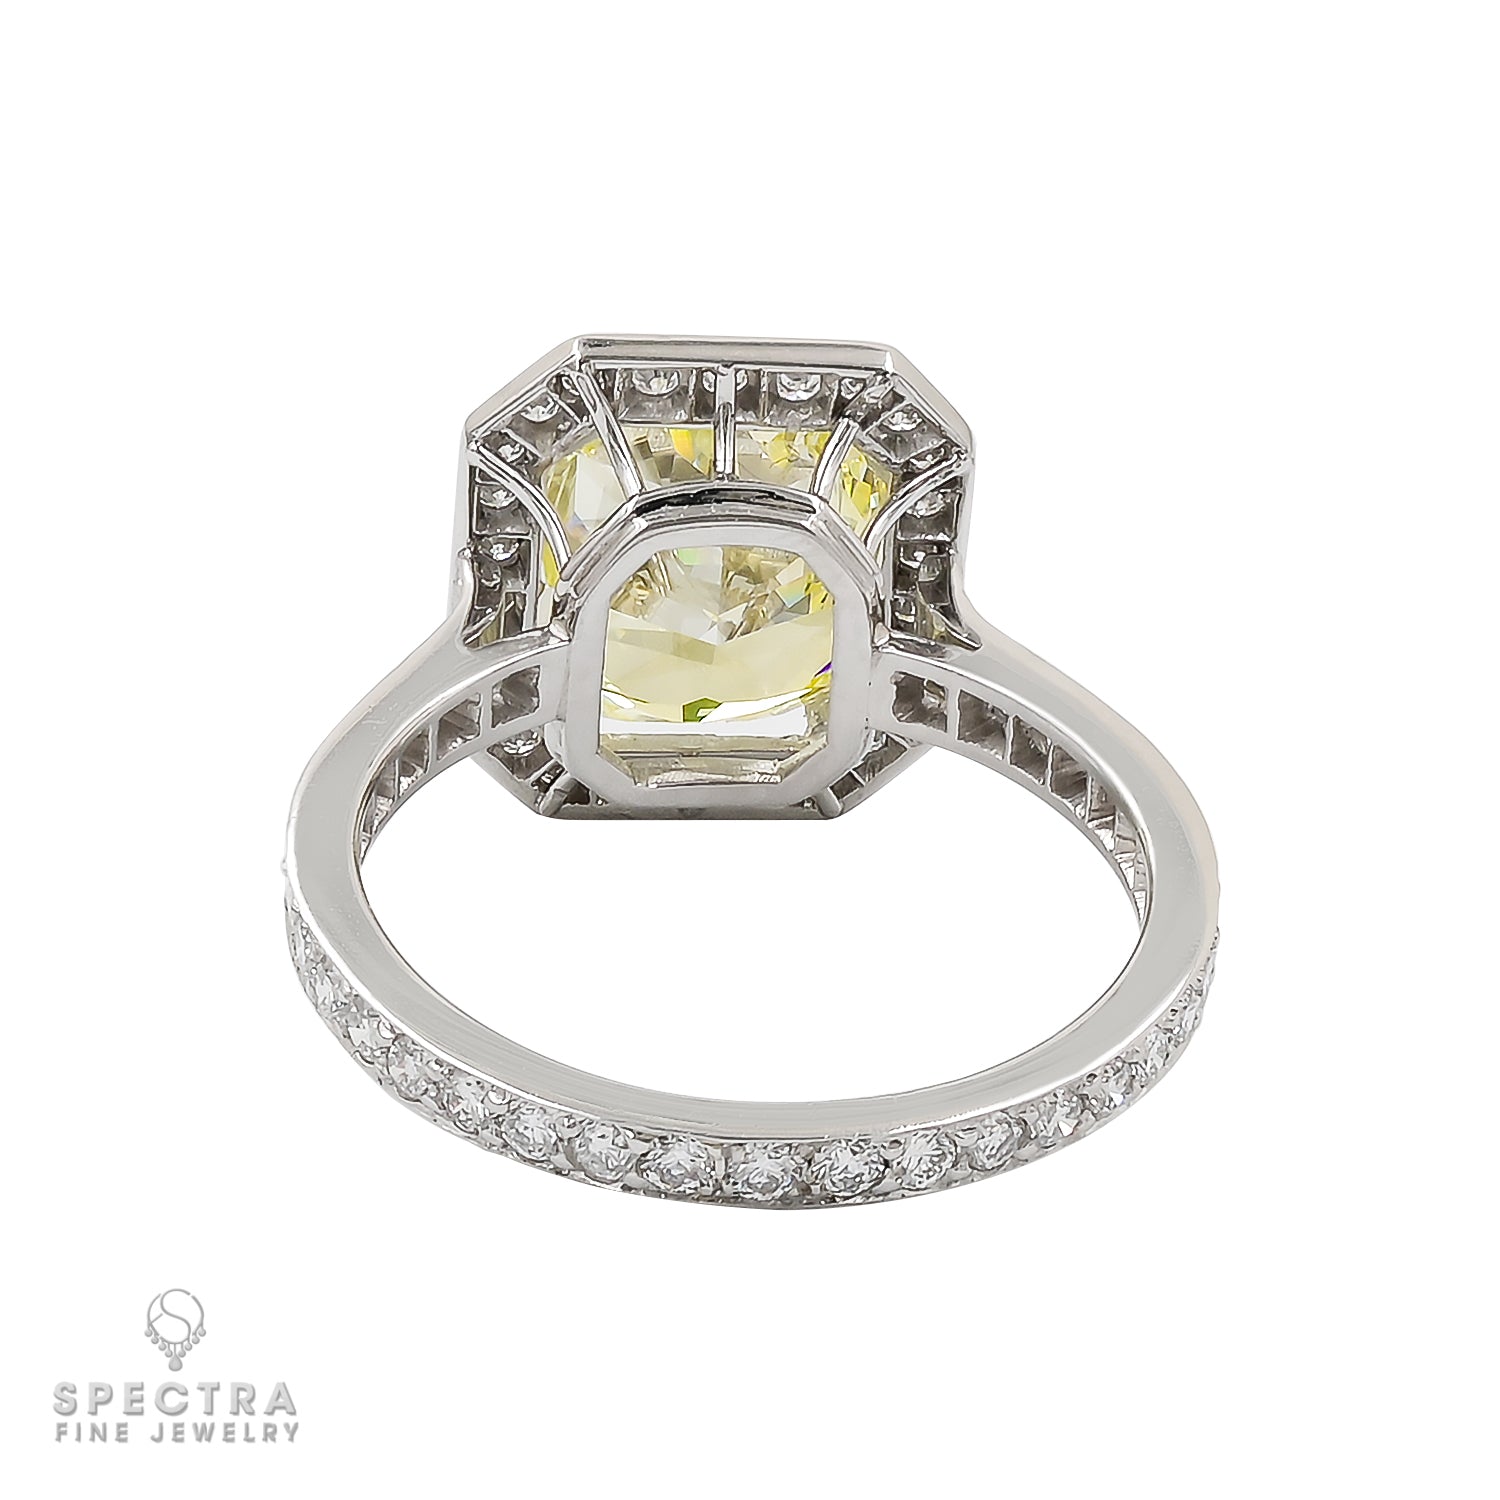 Spectra Fine Jewelry Certified 4.05ct Fancy Yellow Diamond Ring